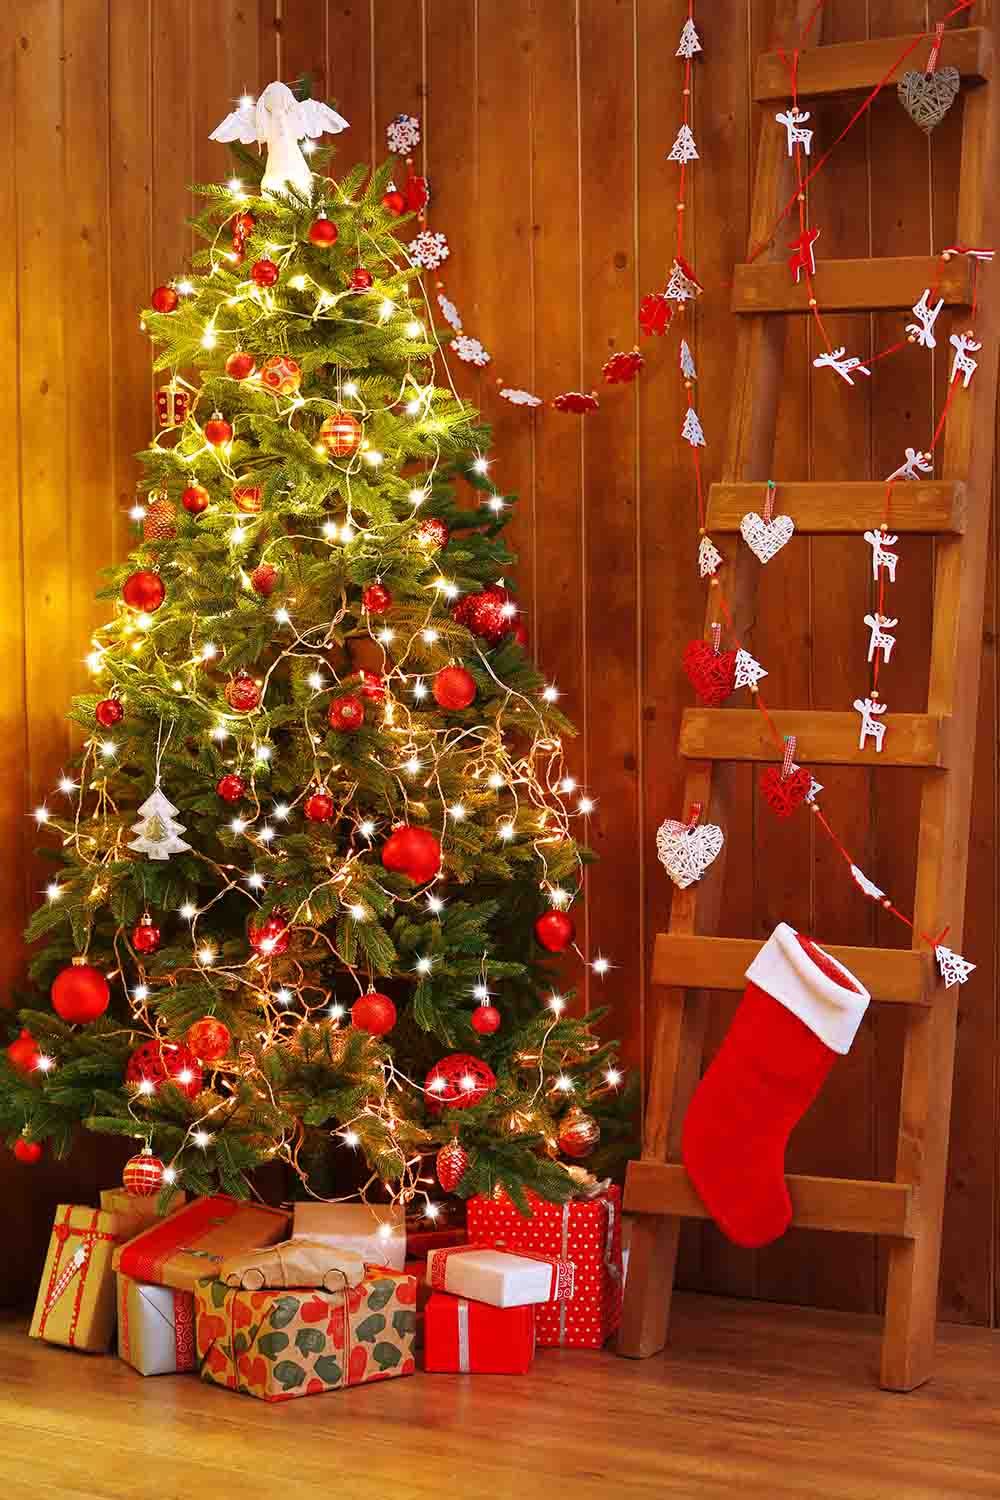 Christmas Stocks Hang On Ladder With Christmas Tree For Holiday Backdrop Shopbackdrop